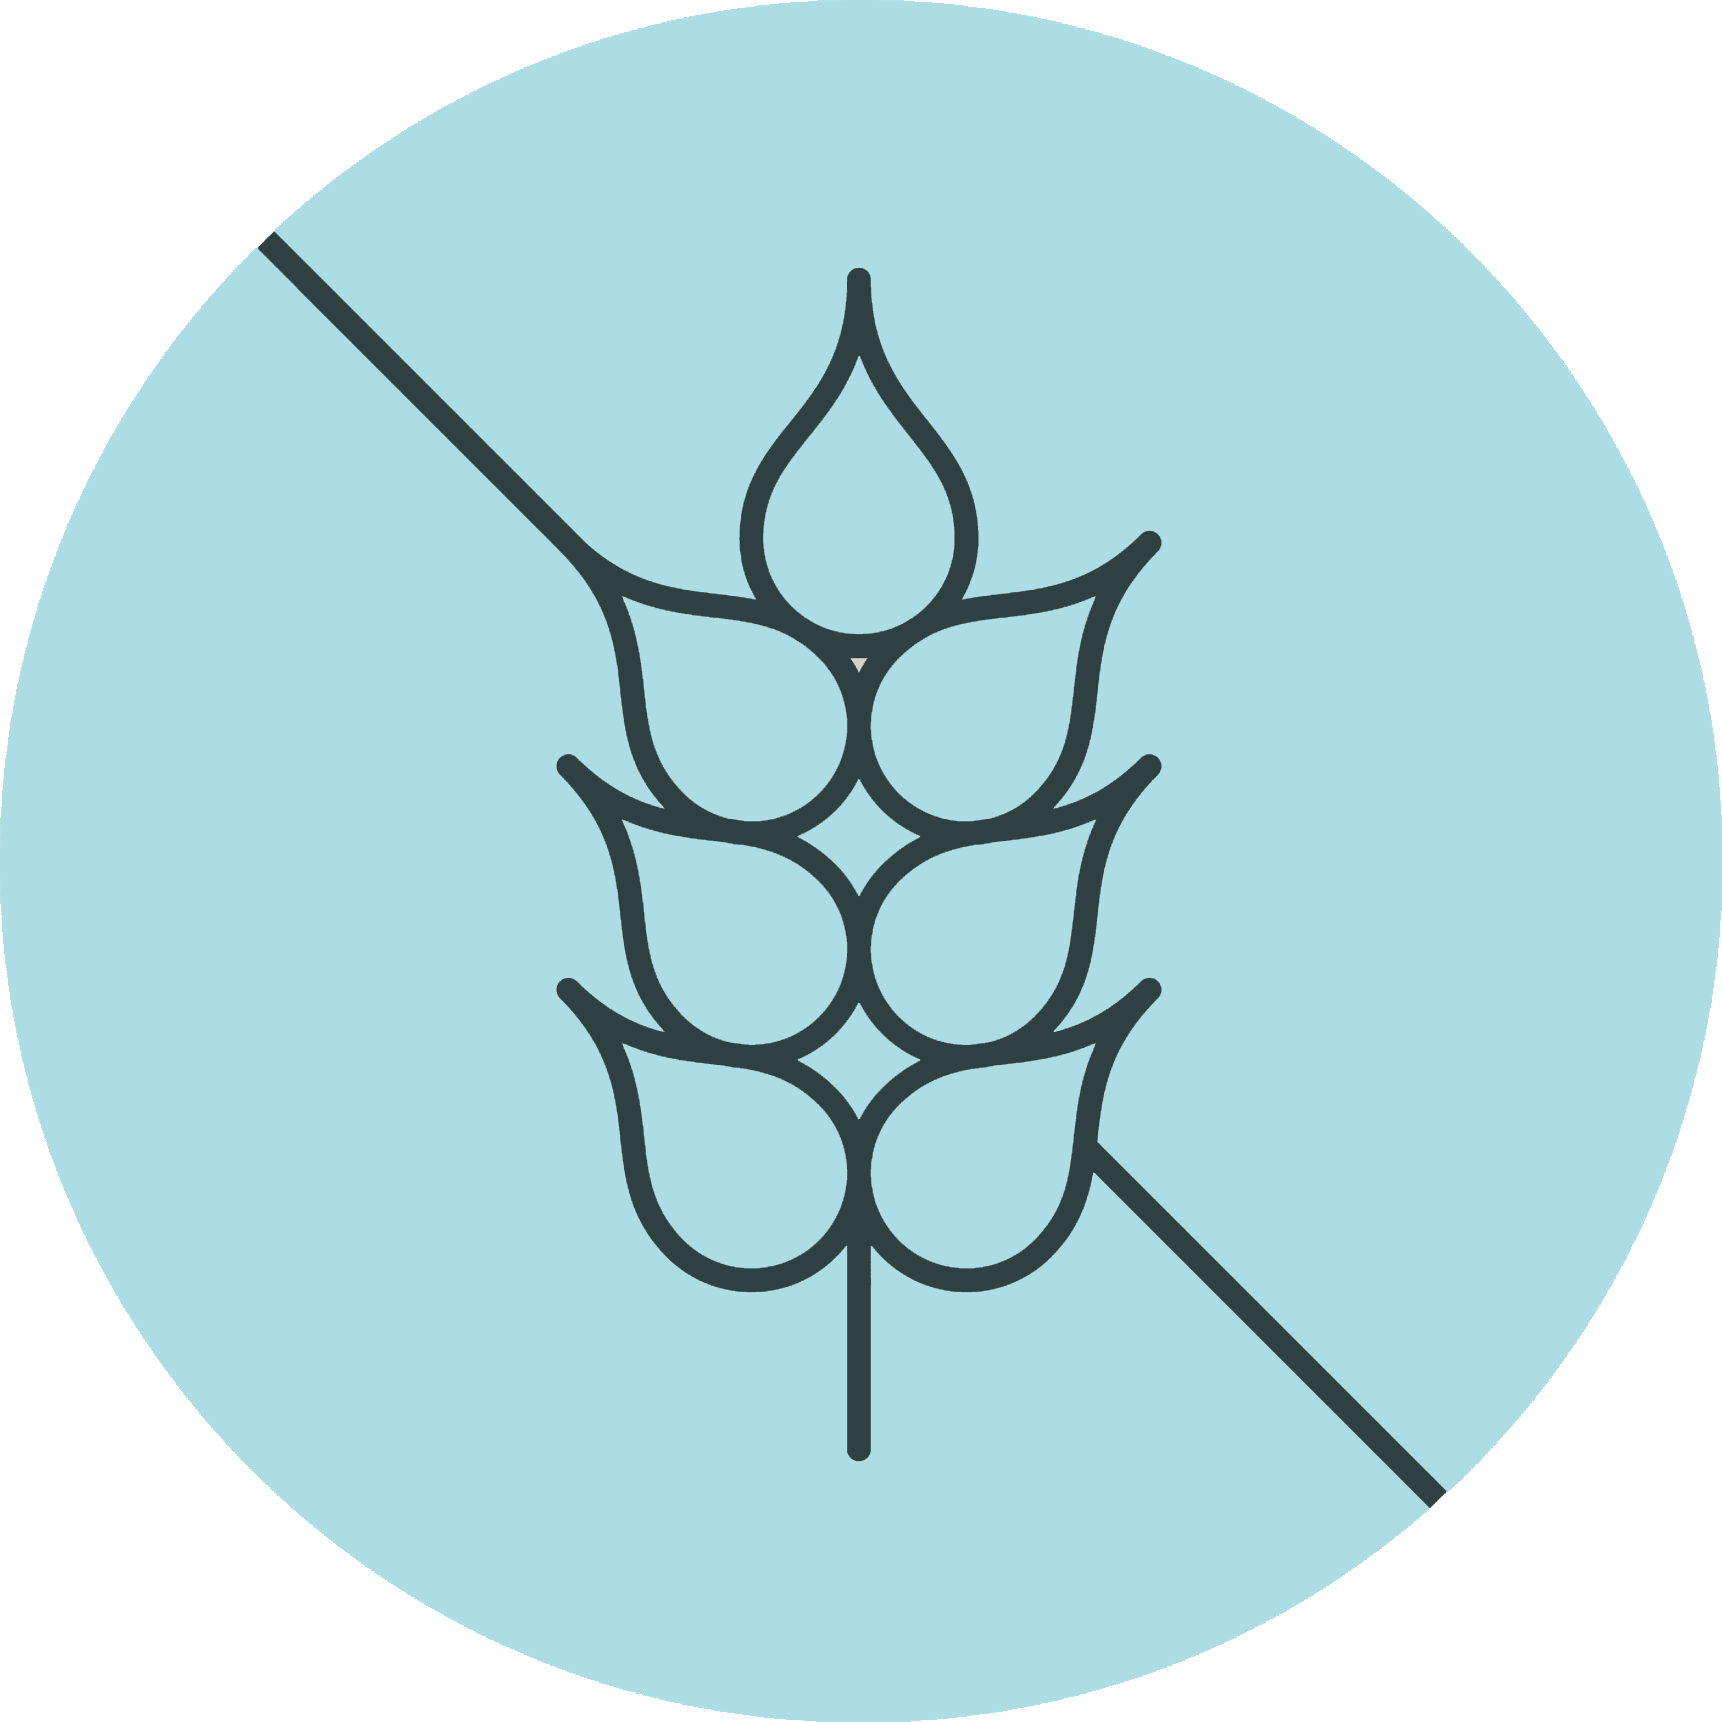 Gluten-free logo with a wheat icon